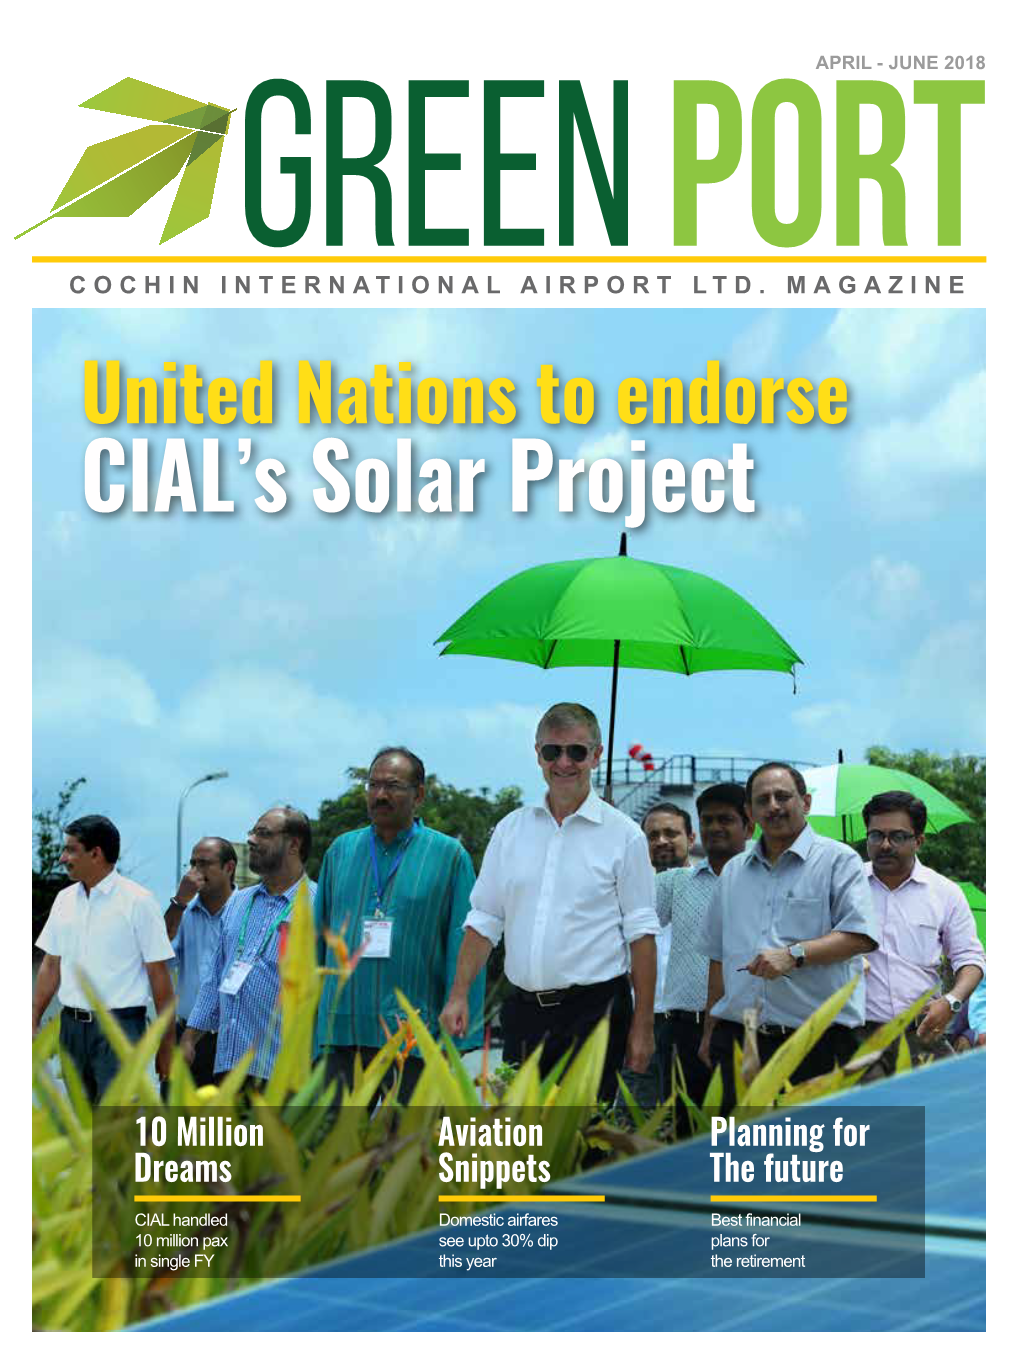 CIAL's Solar Project